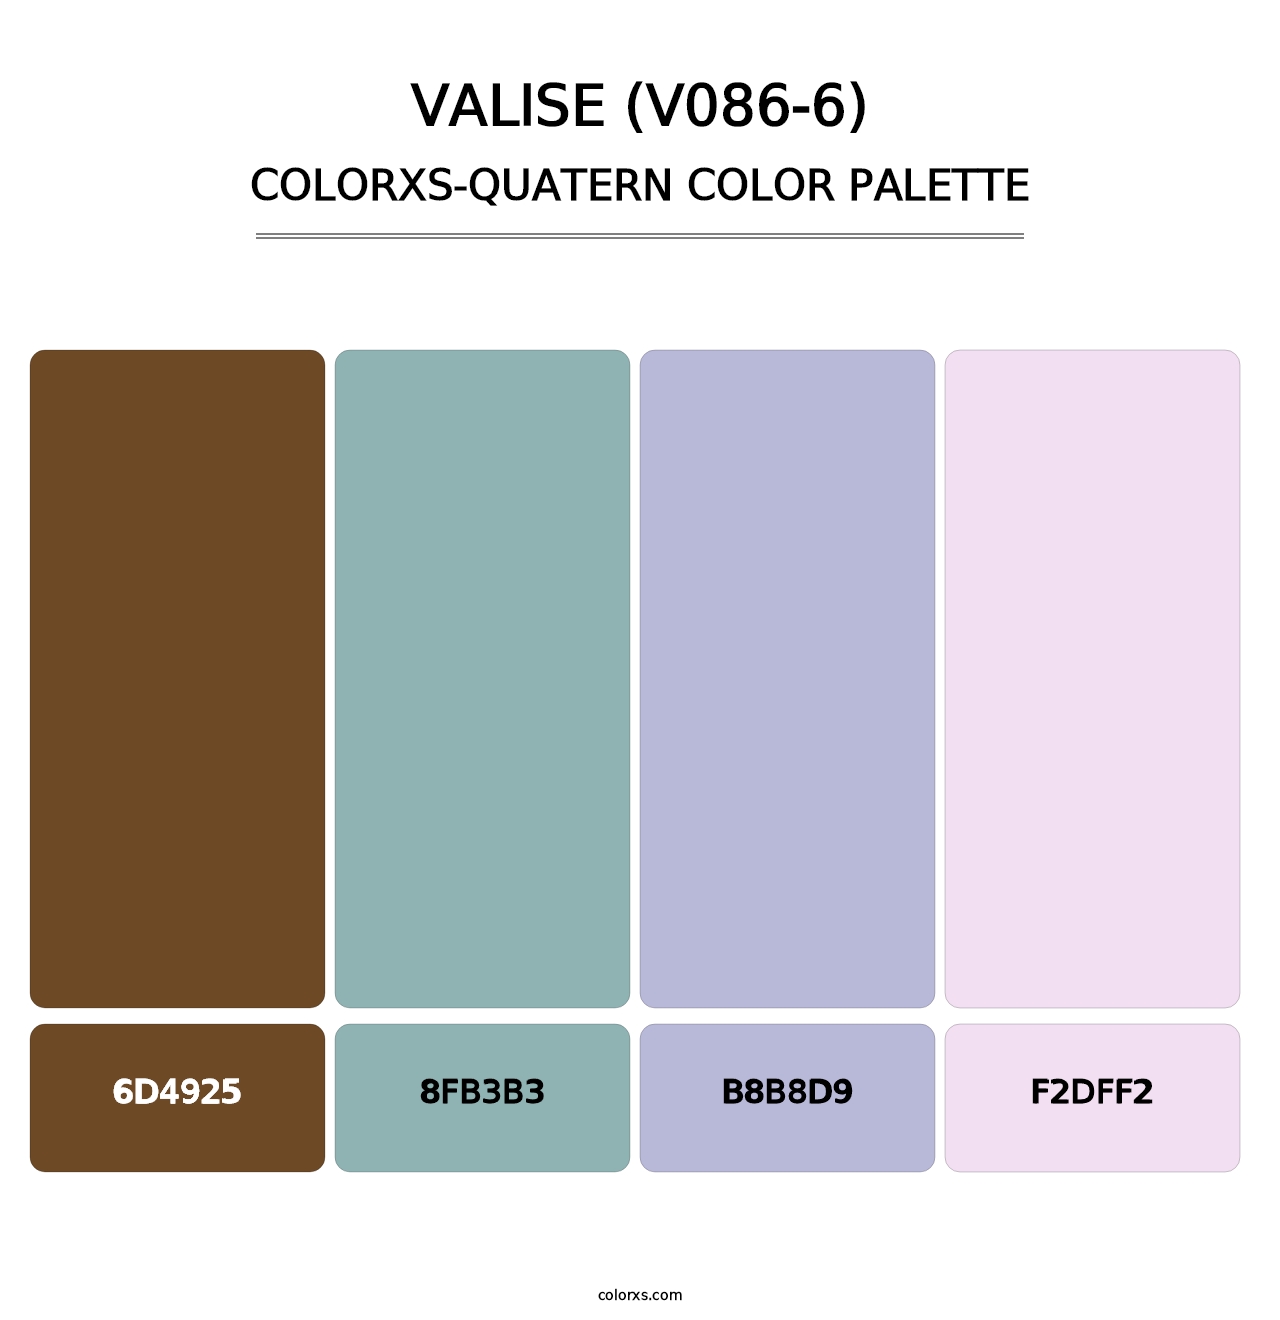 Valise (V086-6) - Colorxs Quatern Palette